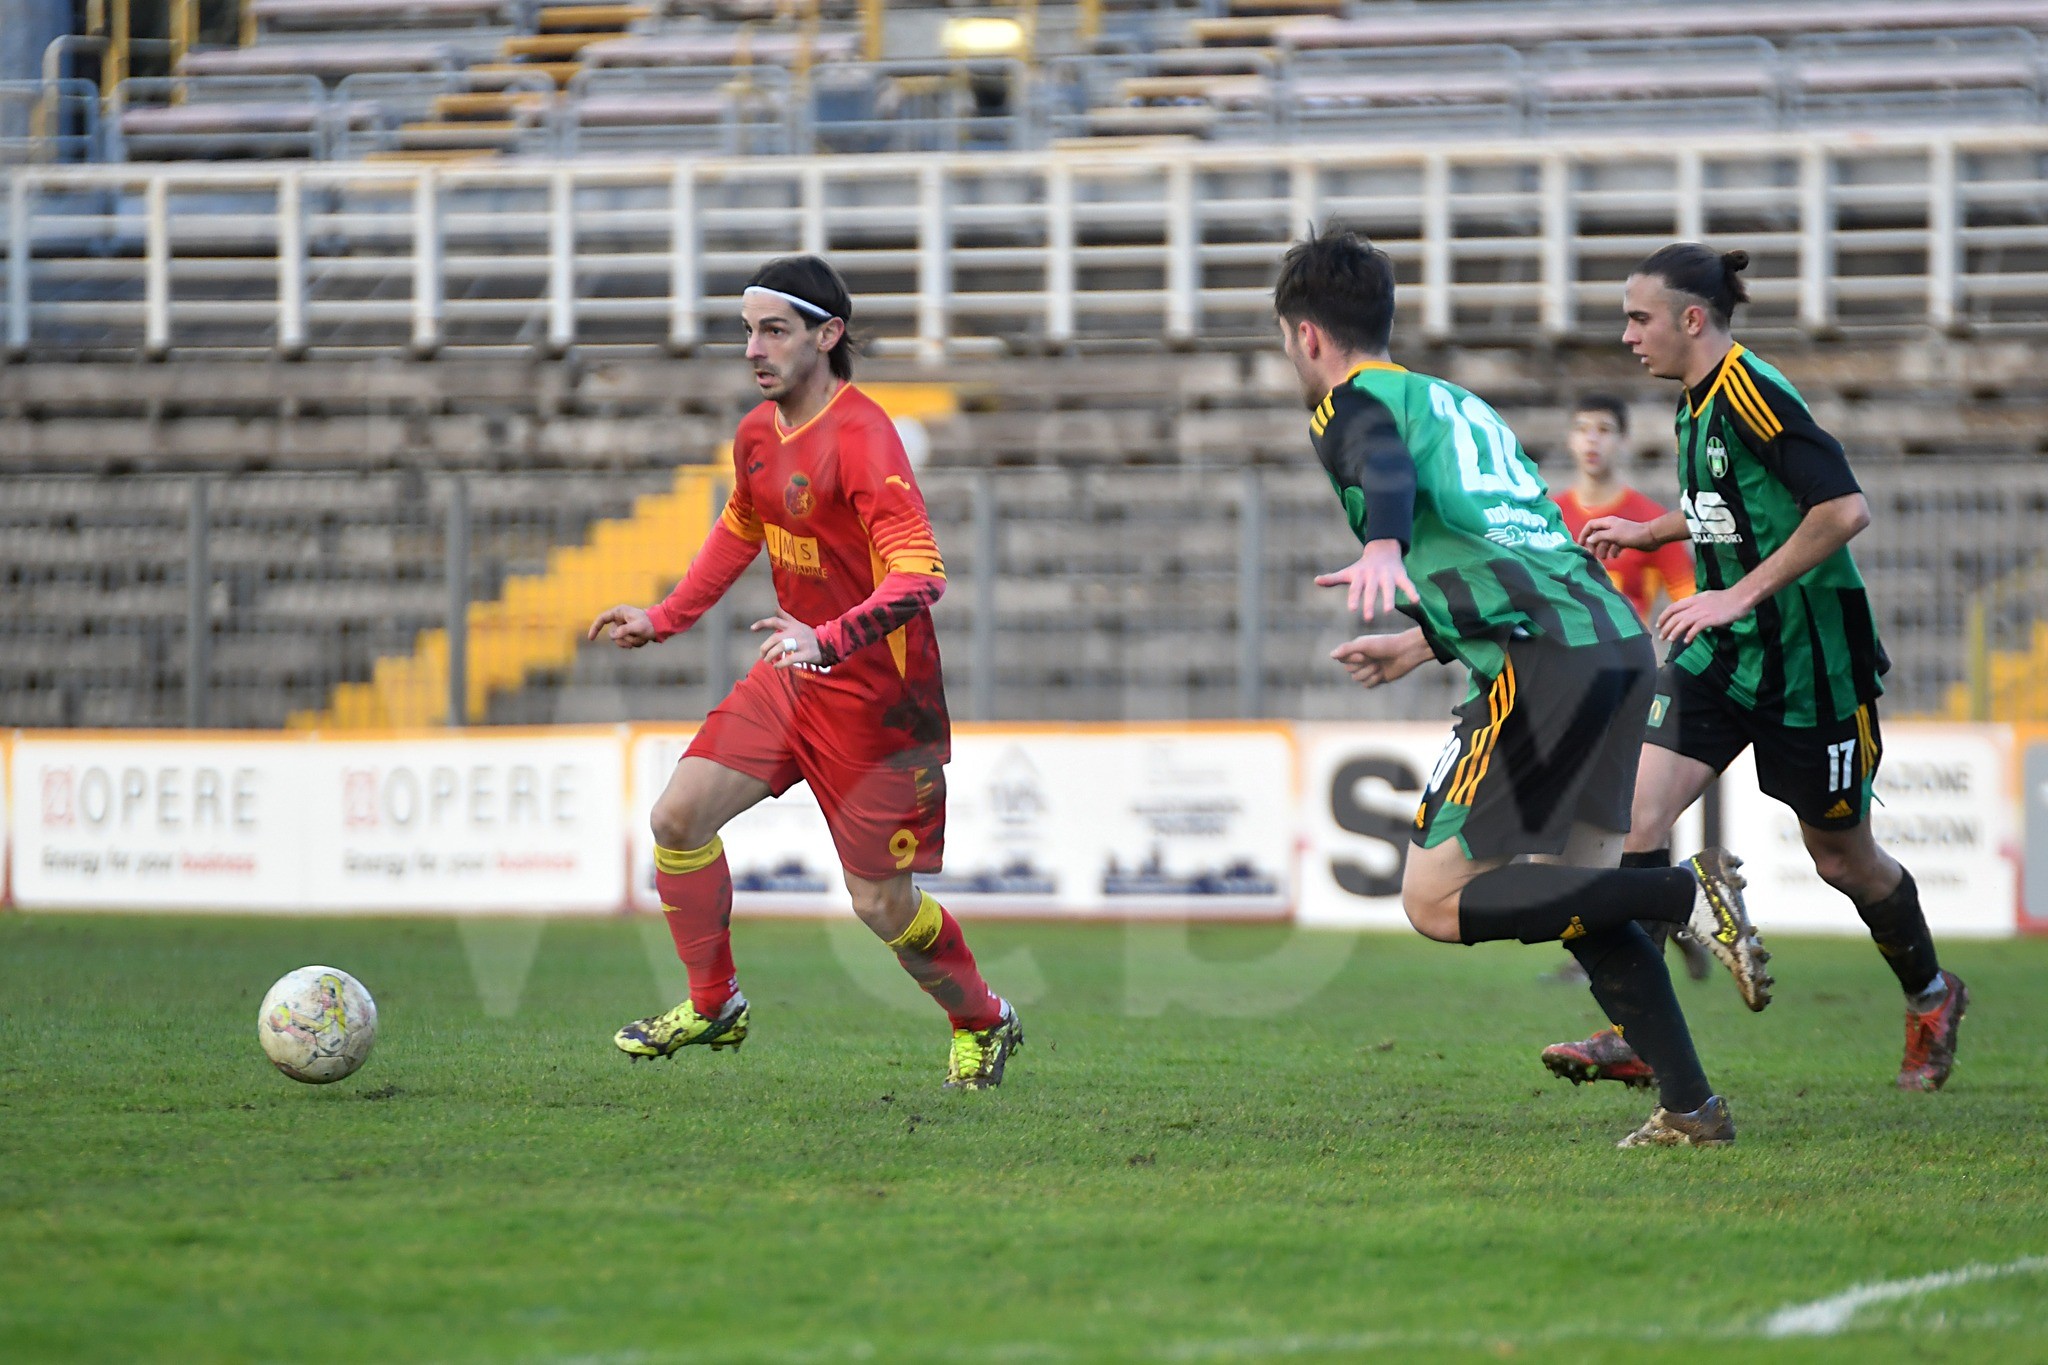 Football: Ravenna brave to attack Fanvola